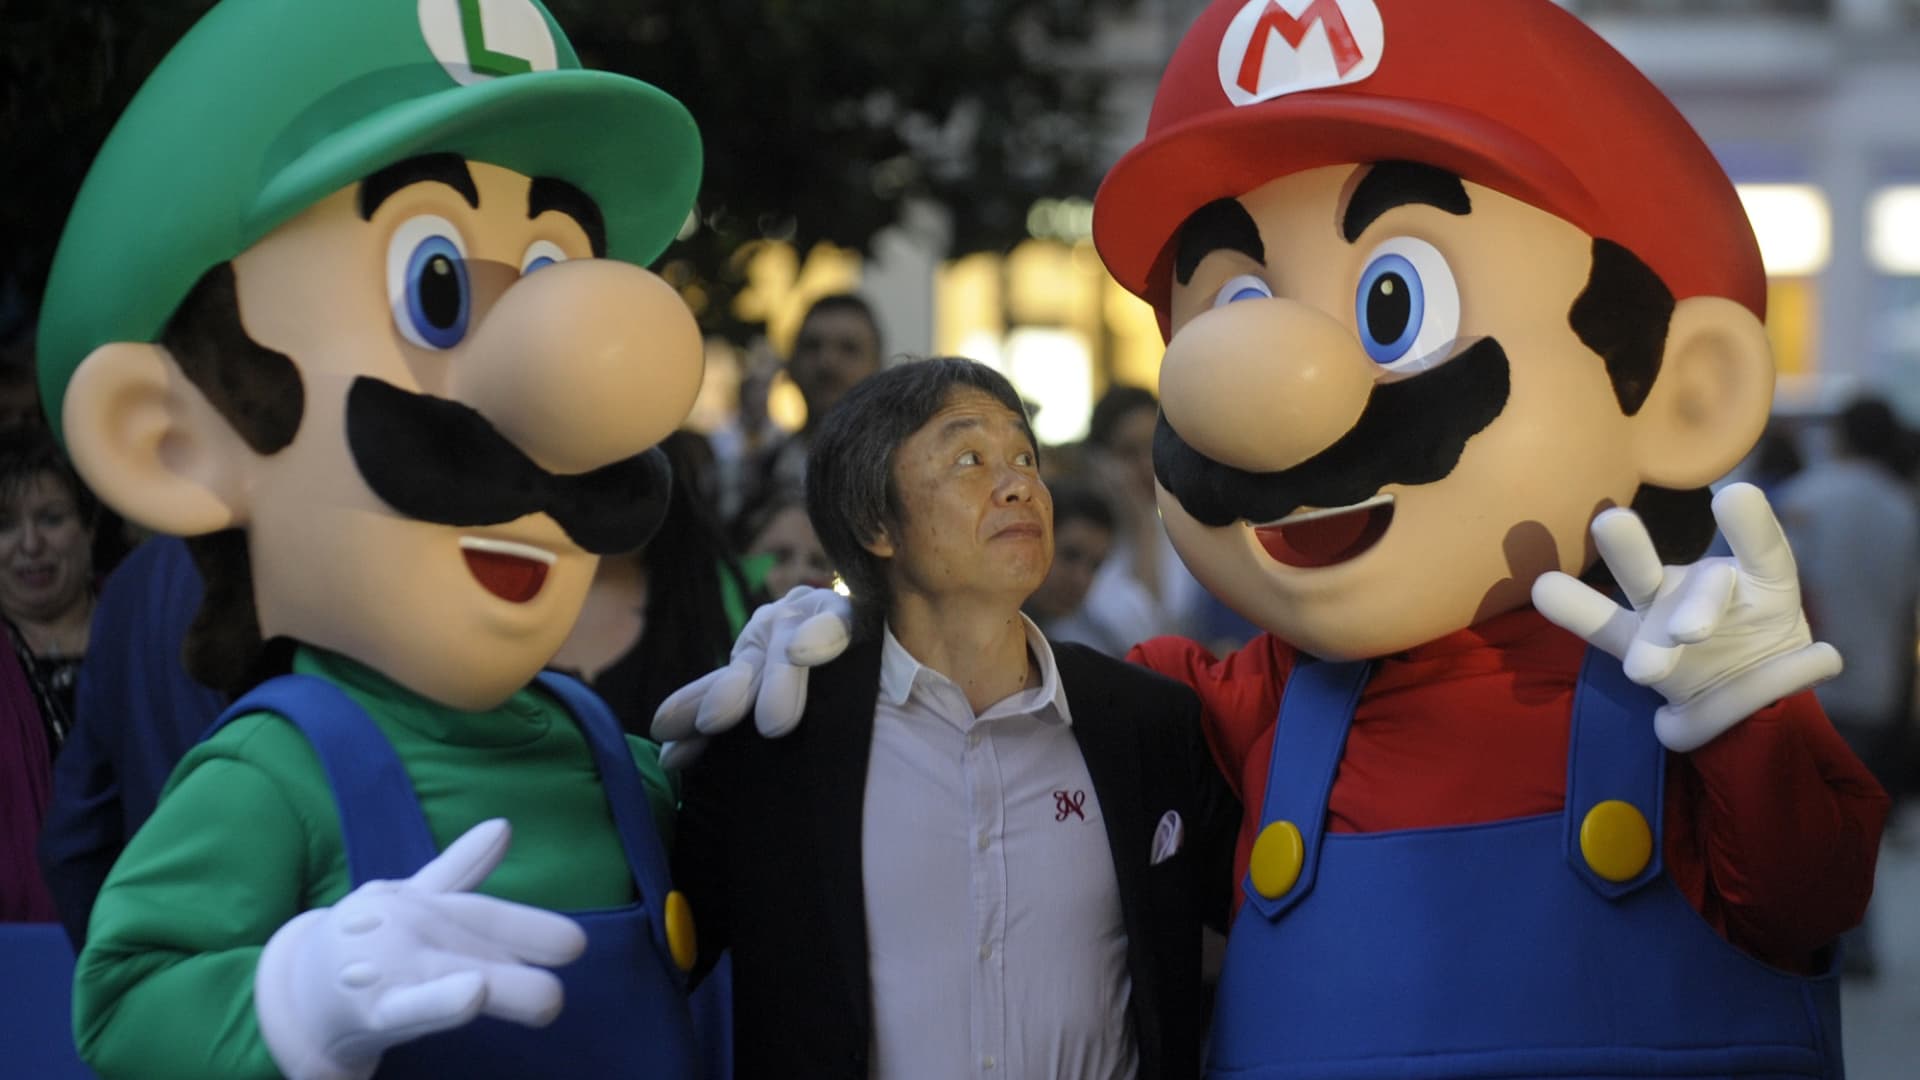 Supper Mario Broth - Photo of Shigeru Miyamoto with a Donkey Kong